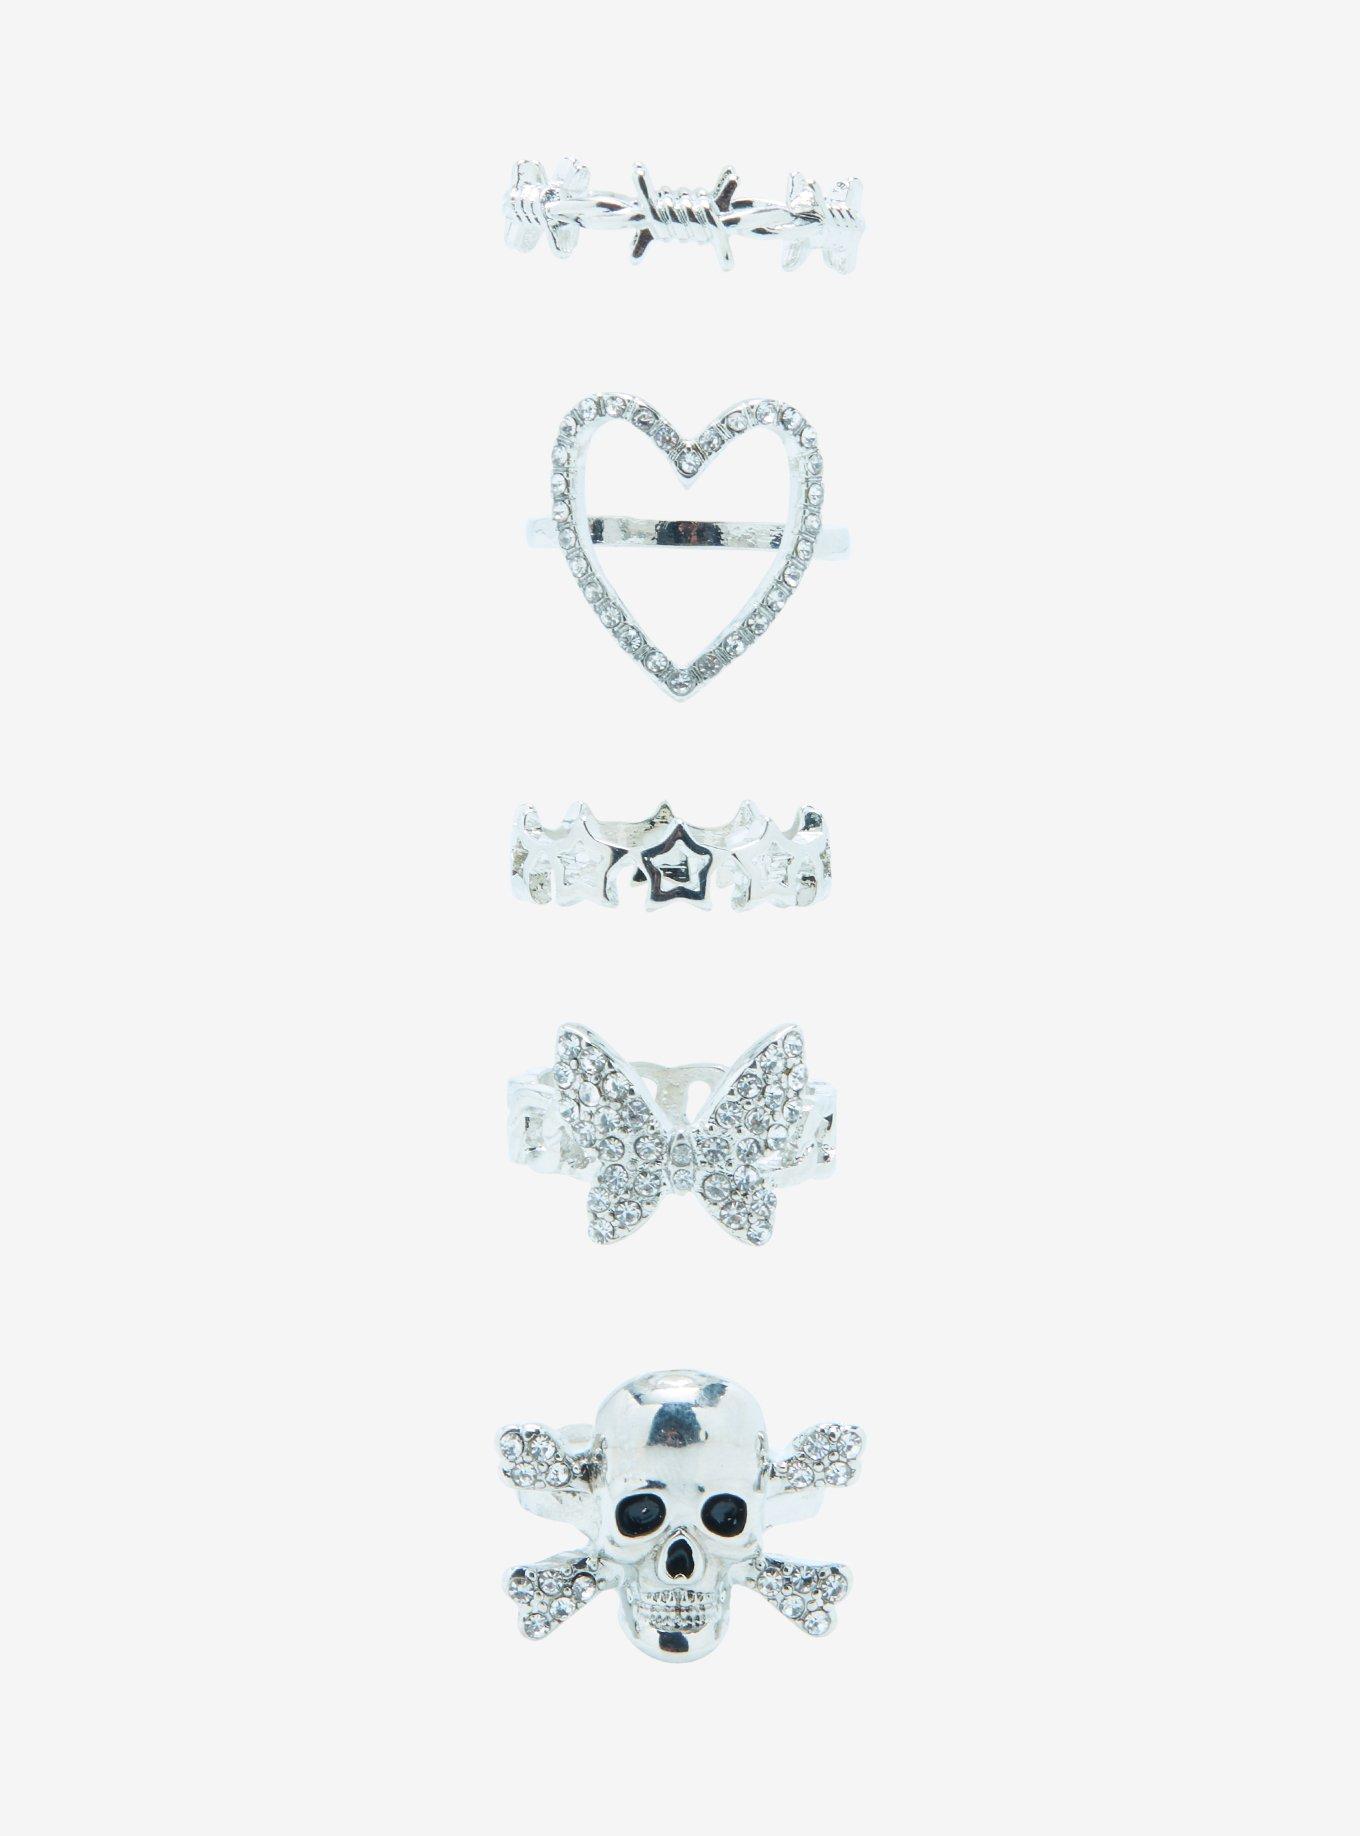 Hot Topic Grunge Heart Star Swirl Tattoo Necklace Set